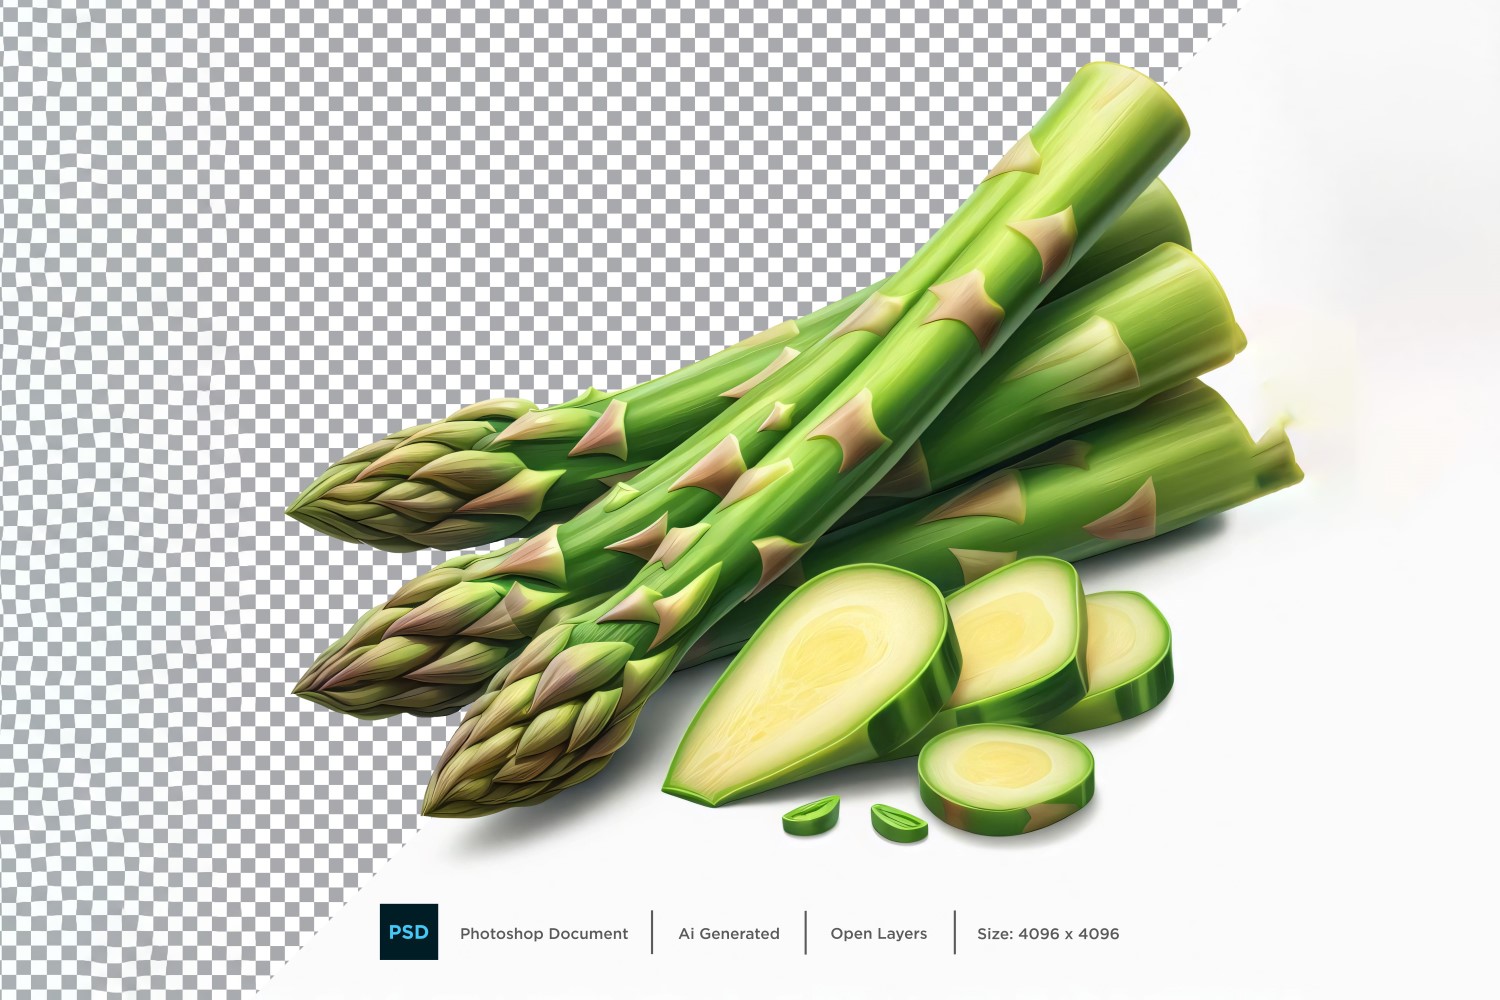 Asparagus Fresh Vegetable Transparent background 03